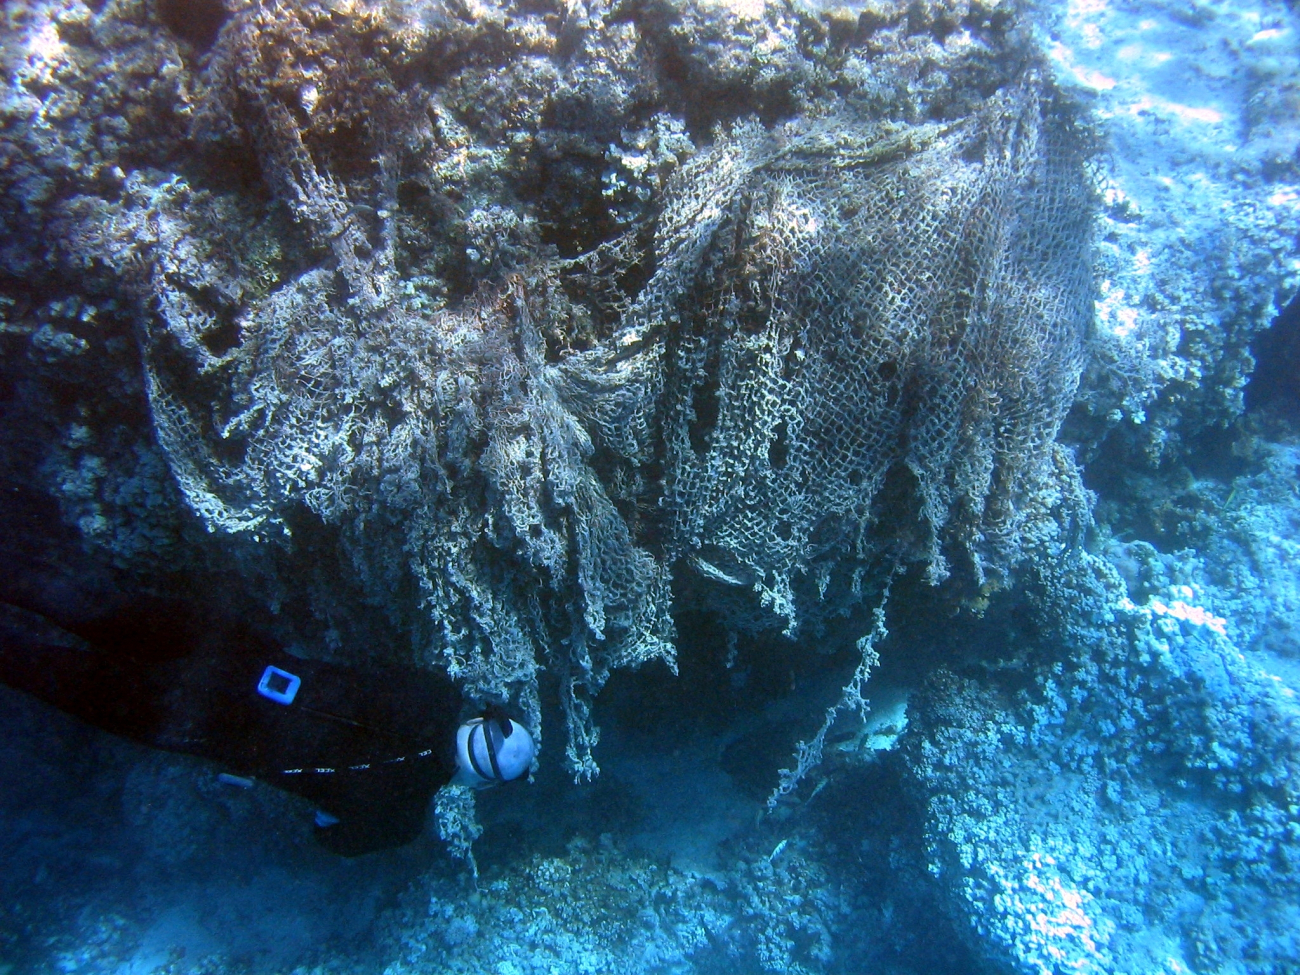 Snorkeler inspecting net debris entangled on coral rock outcrop